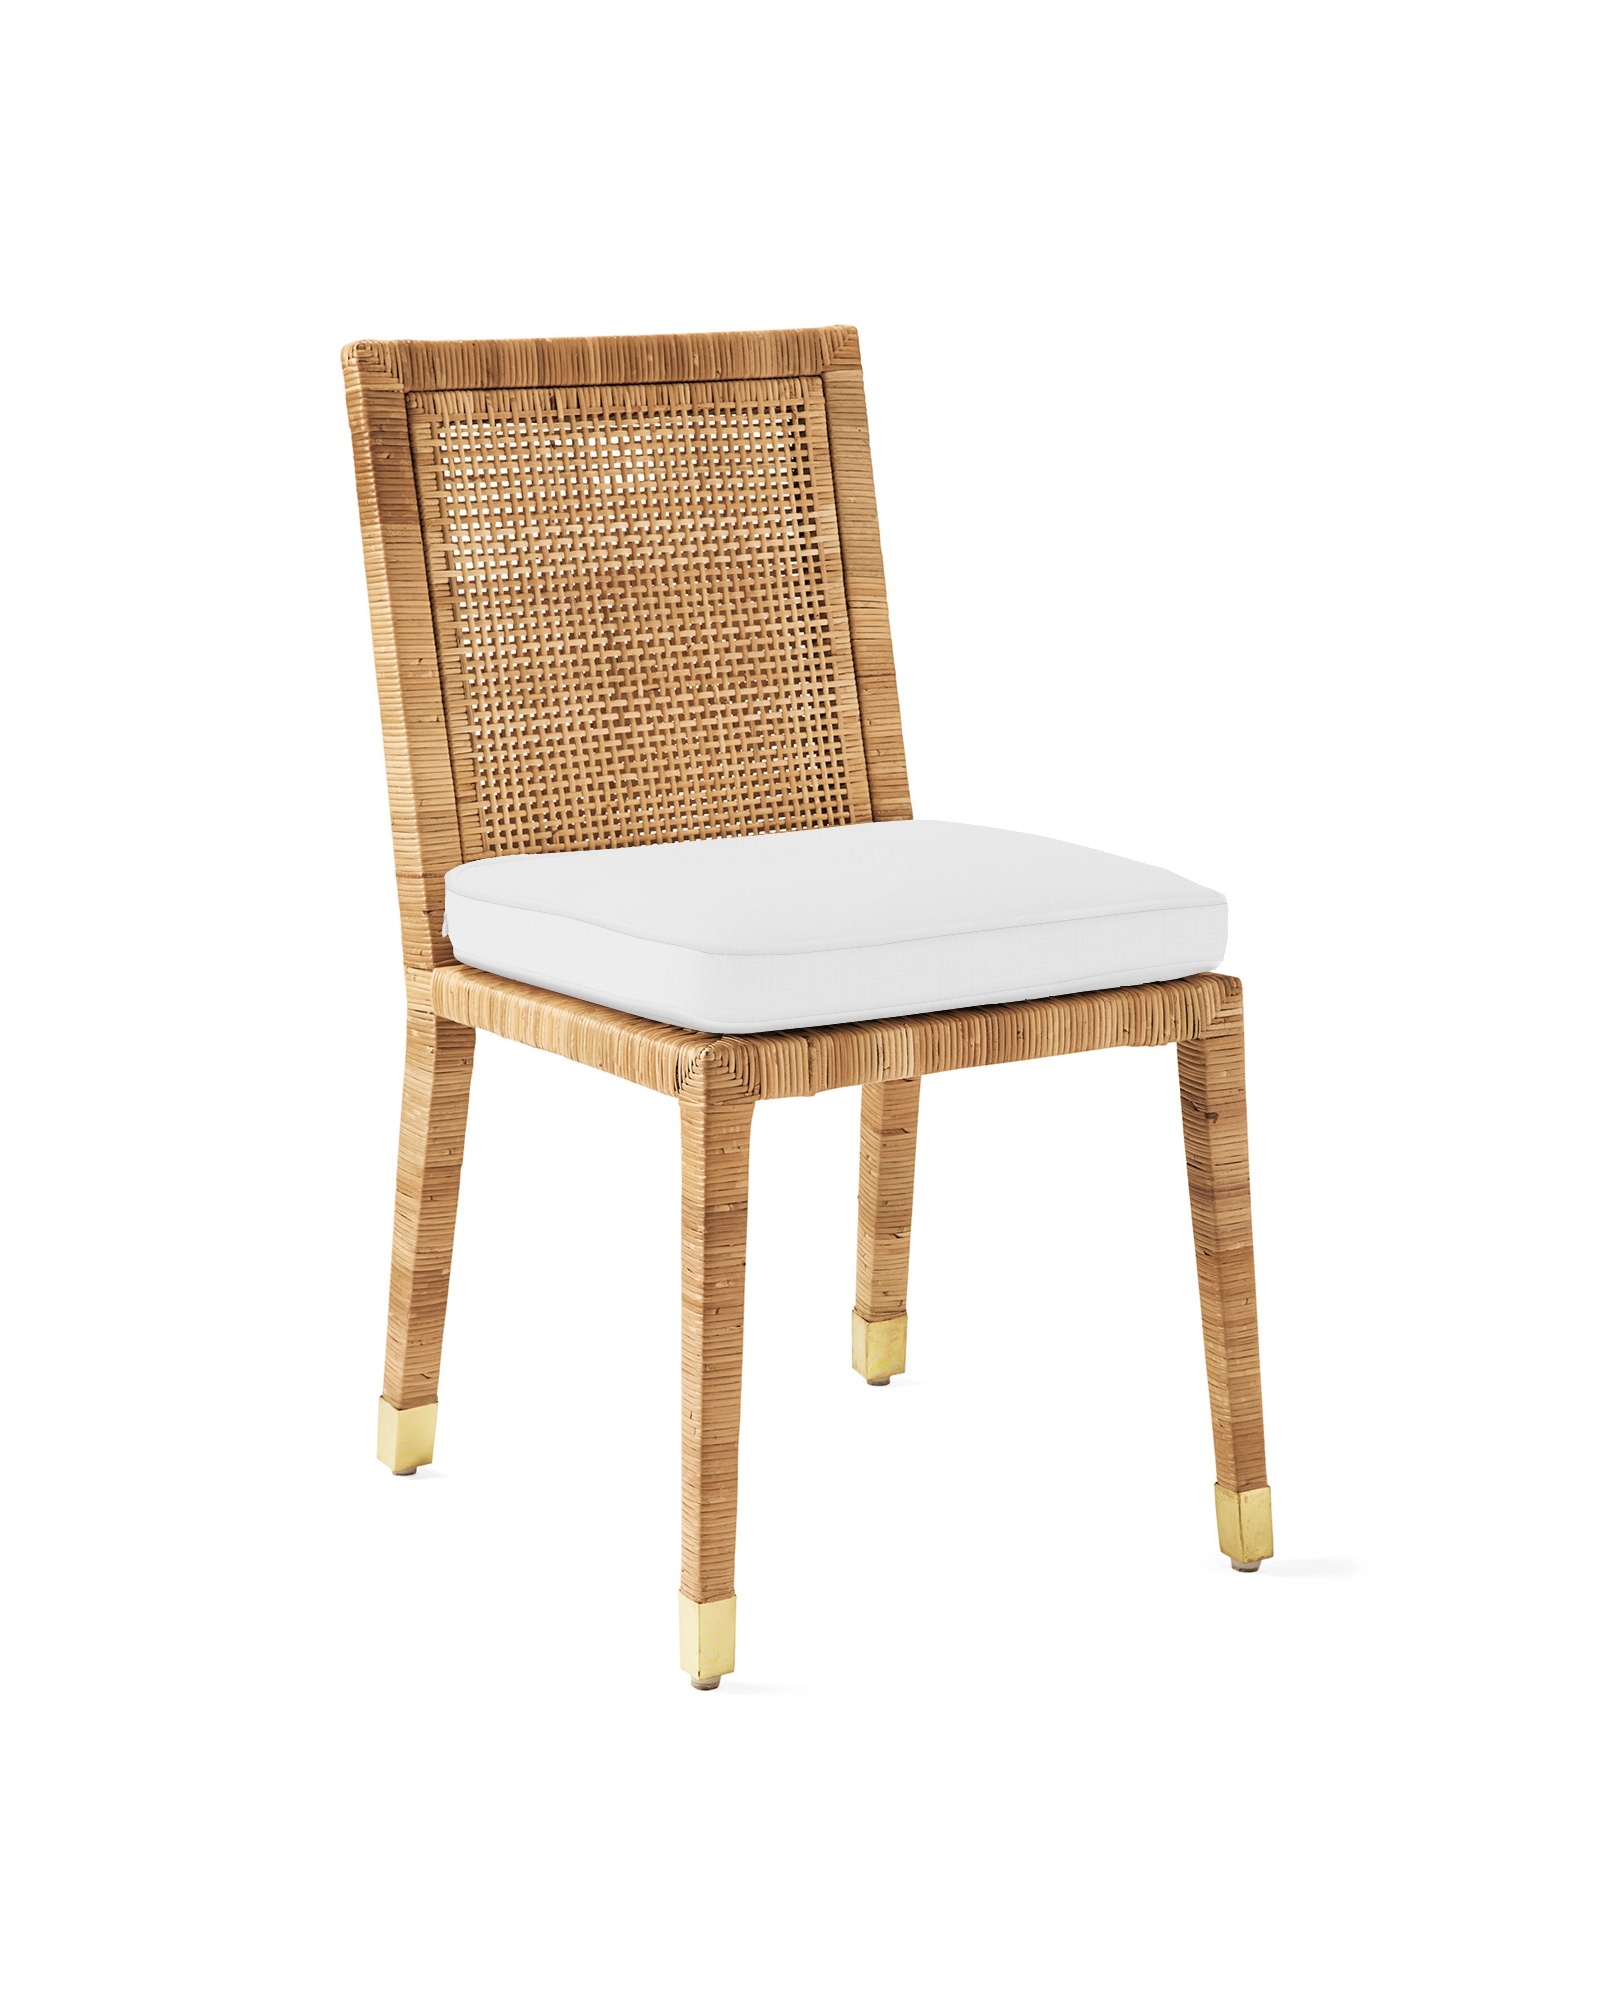 Balboa Rattan Side Chair - Natural - Image 0